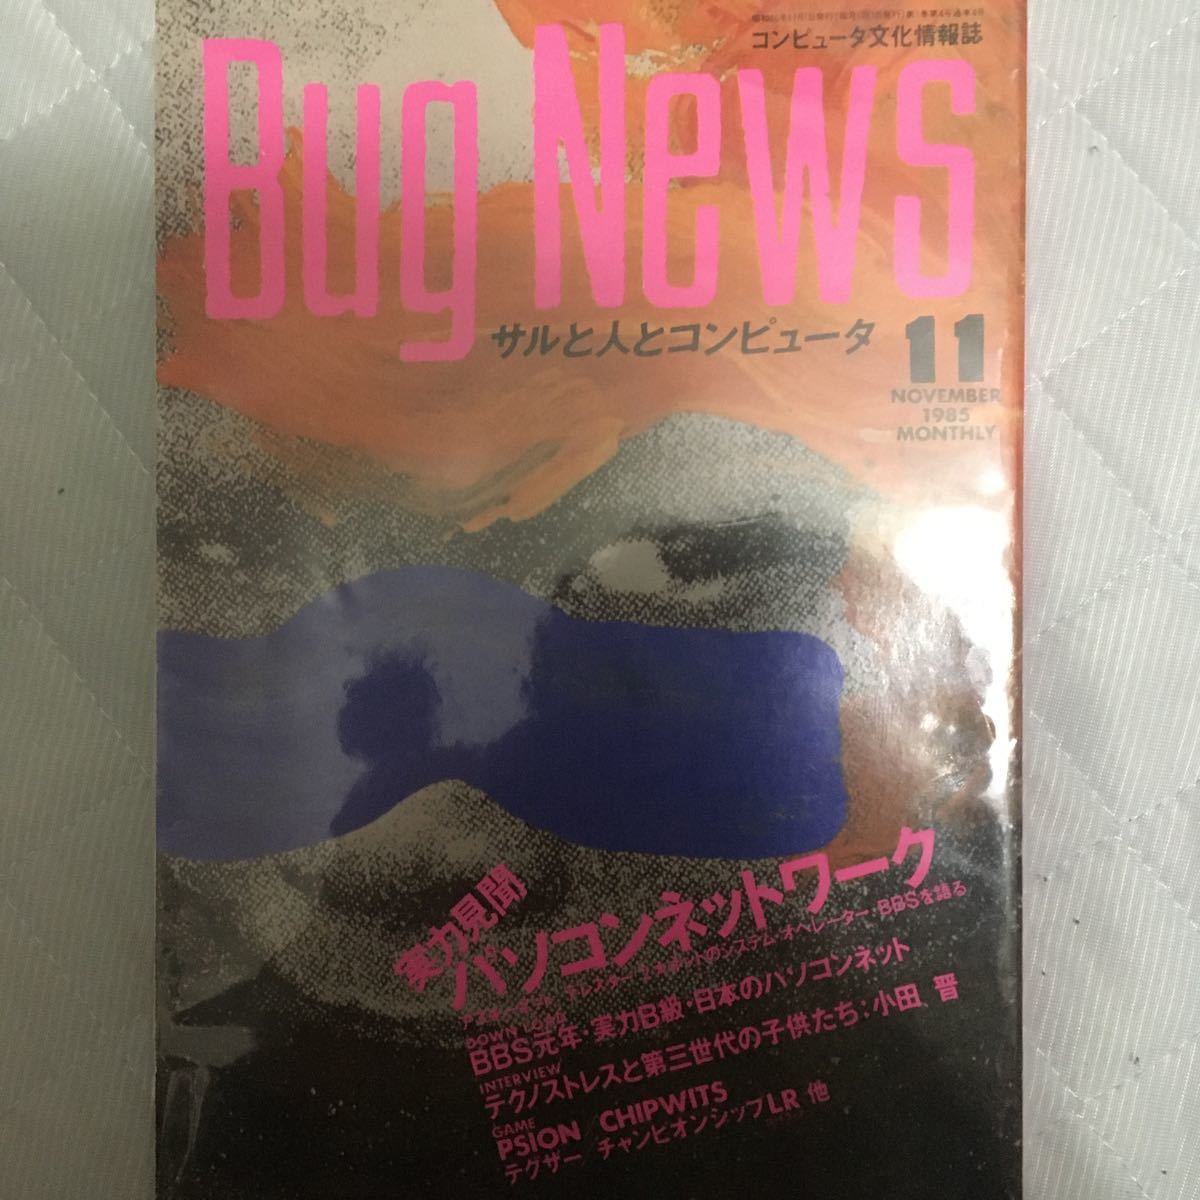 Bug News 1985 год 1 месяц номер компьютер культура информация журнал 